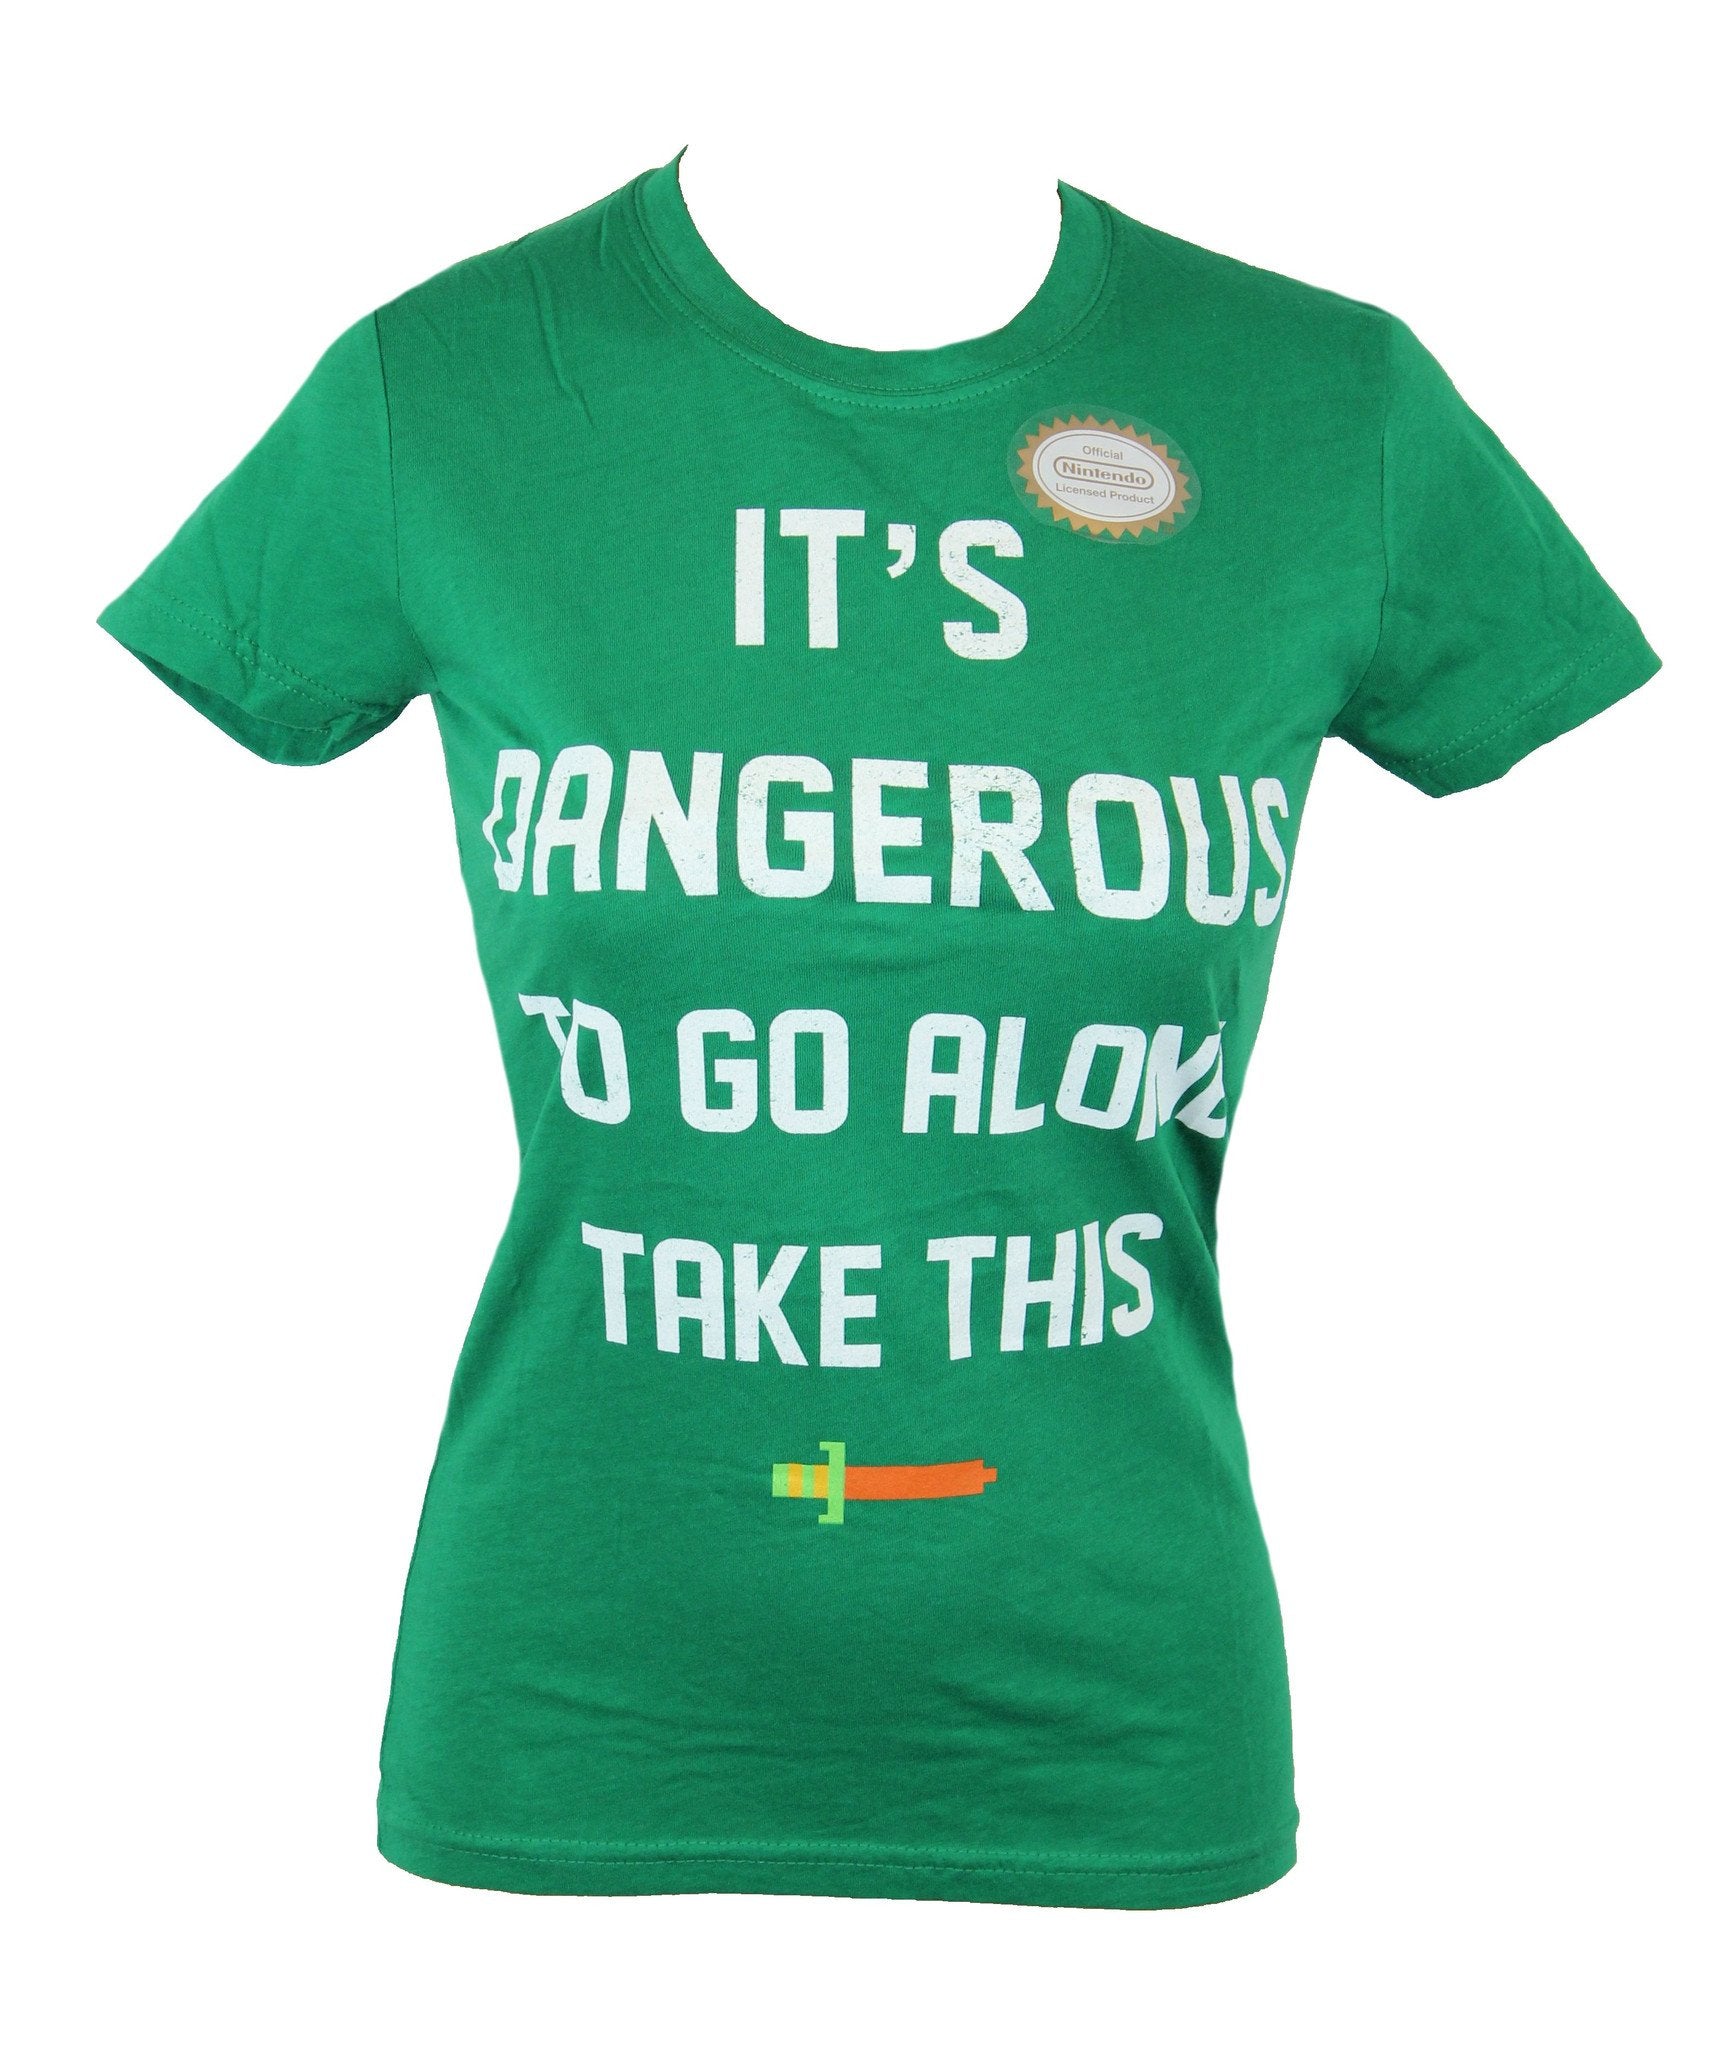 Legend of Zelda Girls Juniors T-Shirt - "It's Dangerous to Go Alone Take This"